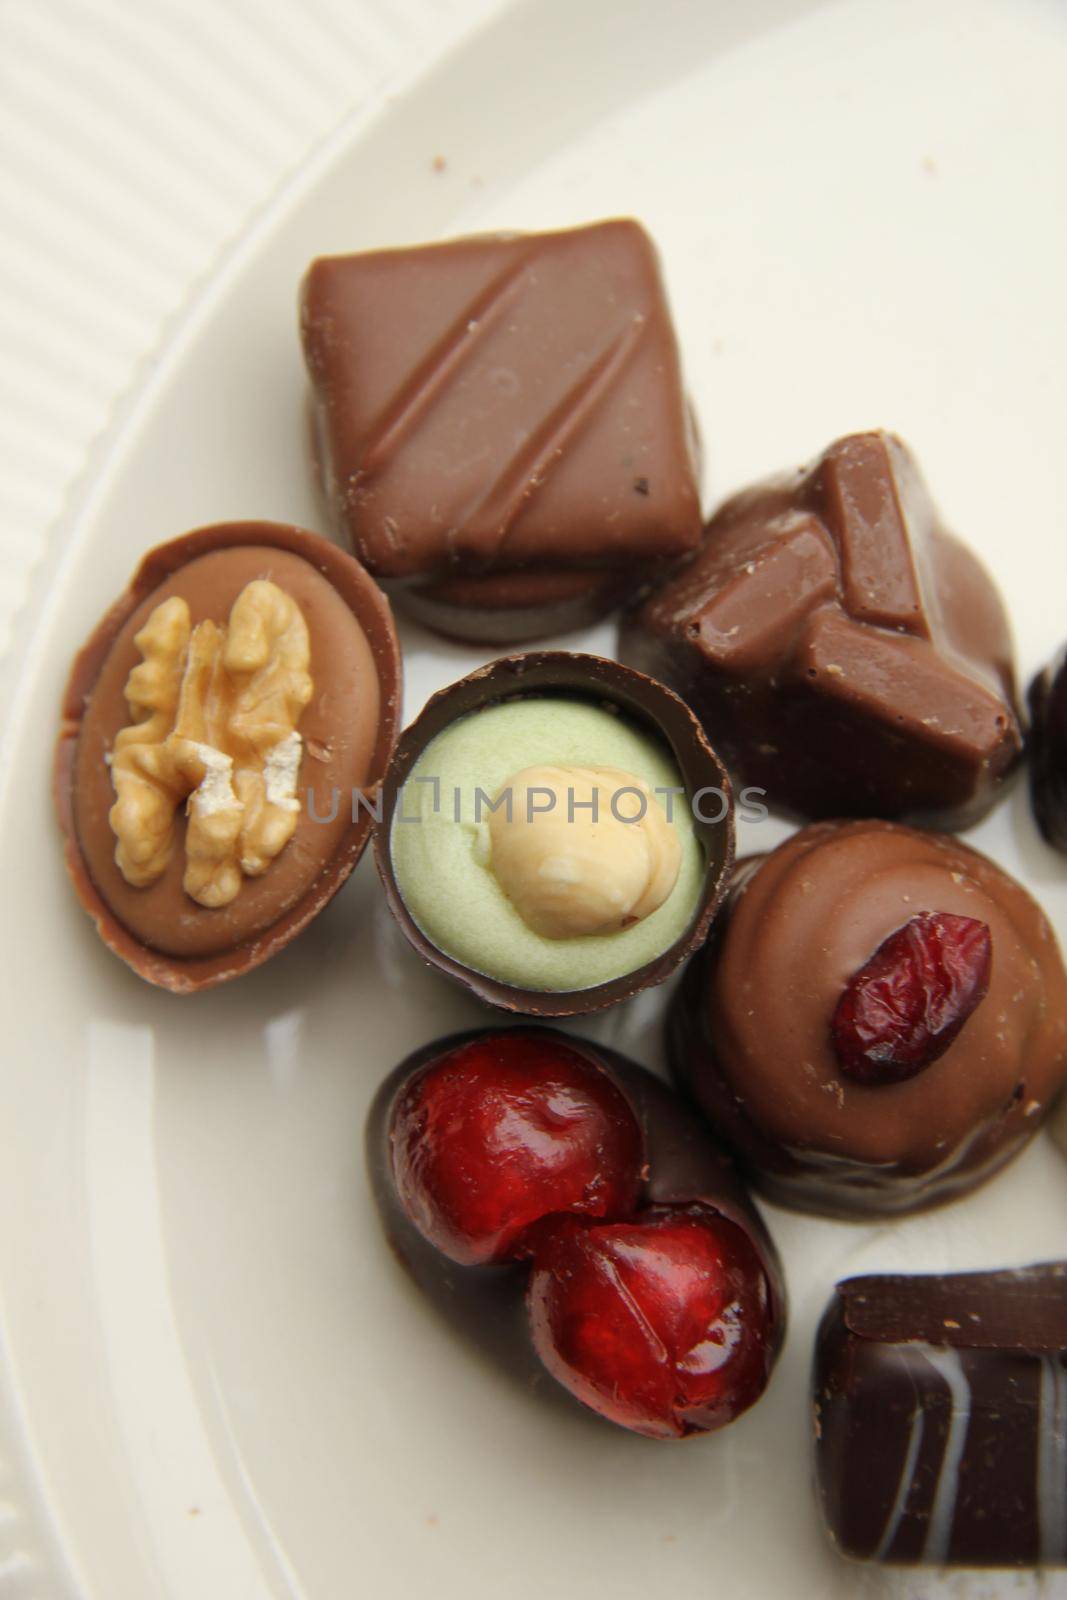 Decorated chocolates by studioportosabbia